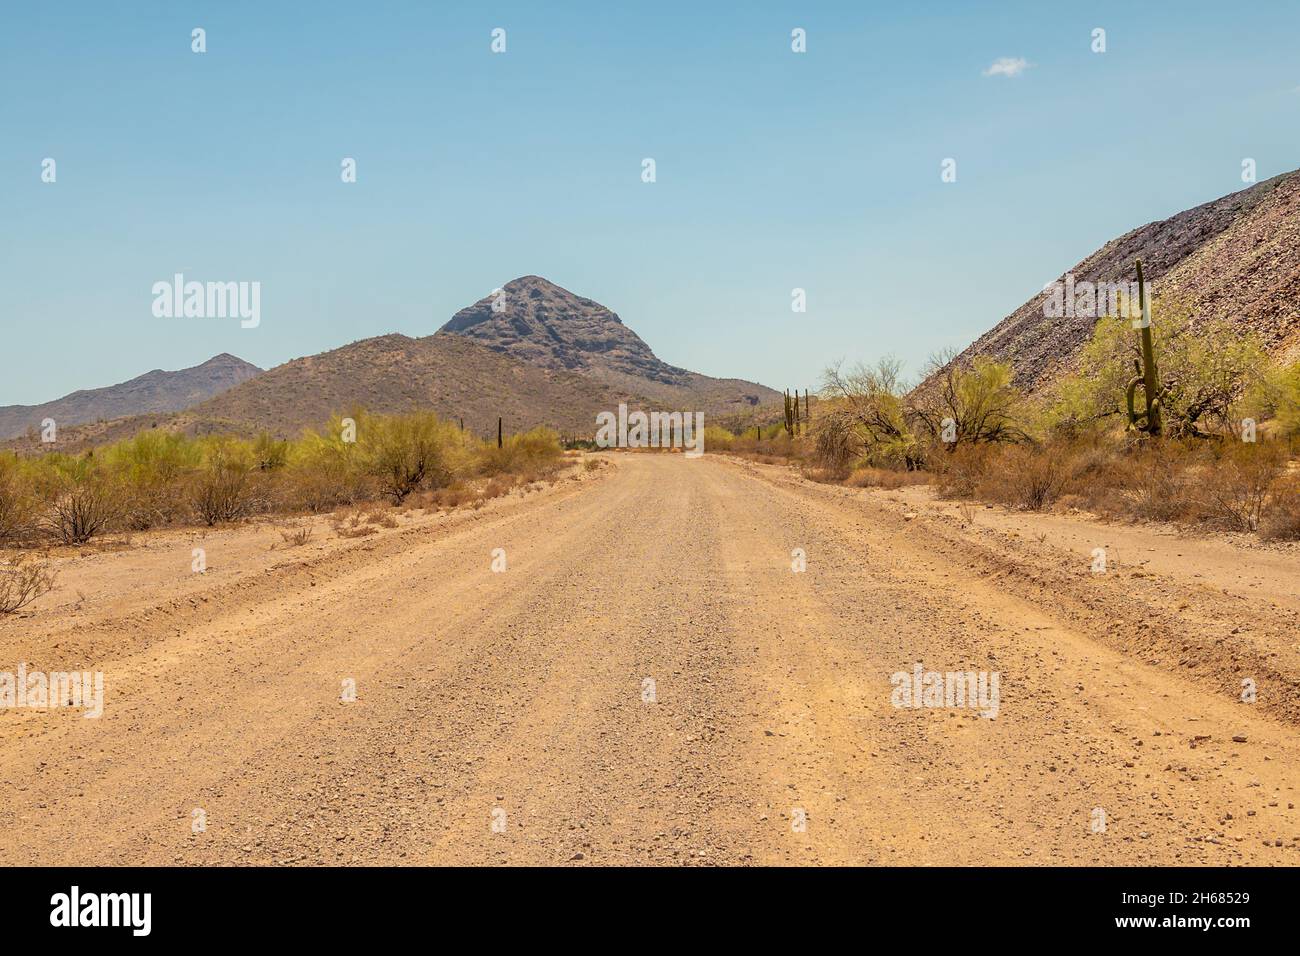 Dusty road leading to a mountain in Arizona Stock Photo